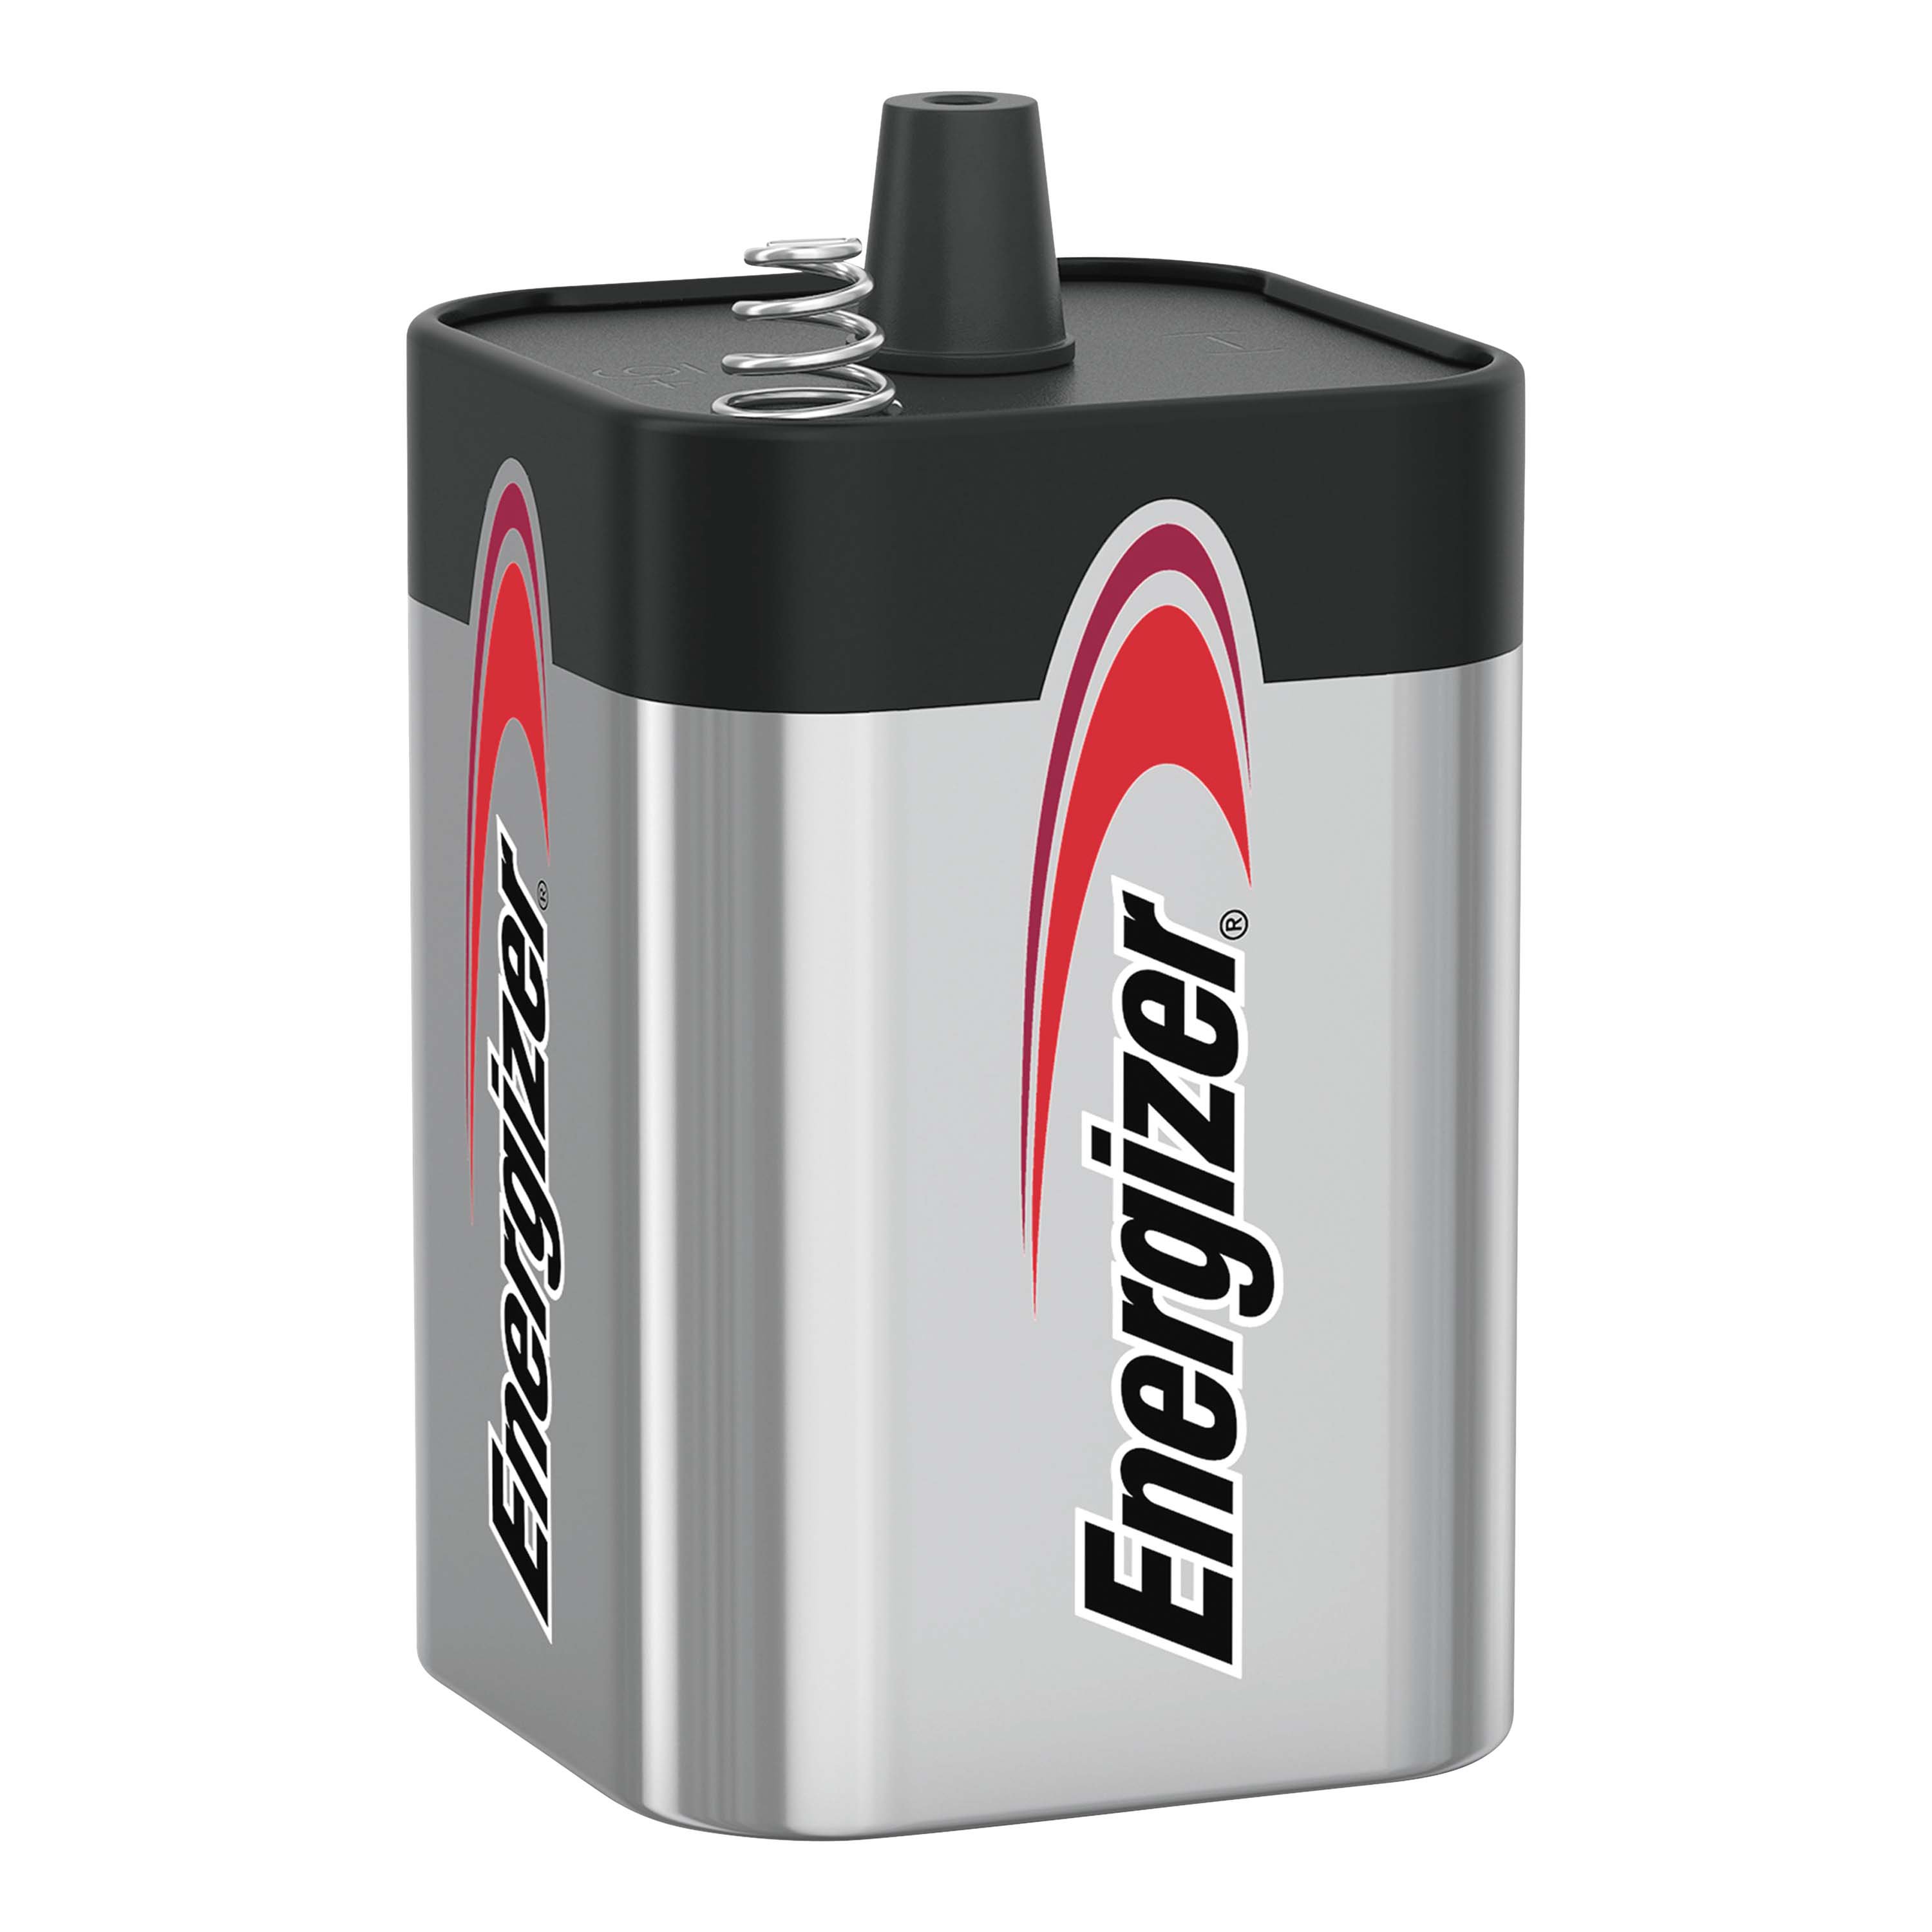 Energizer 6 NEW AAAA Batteries